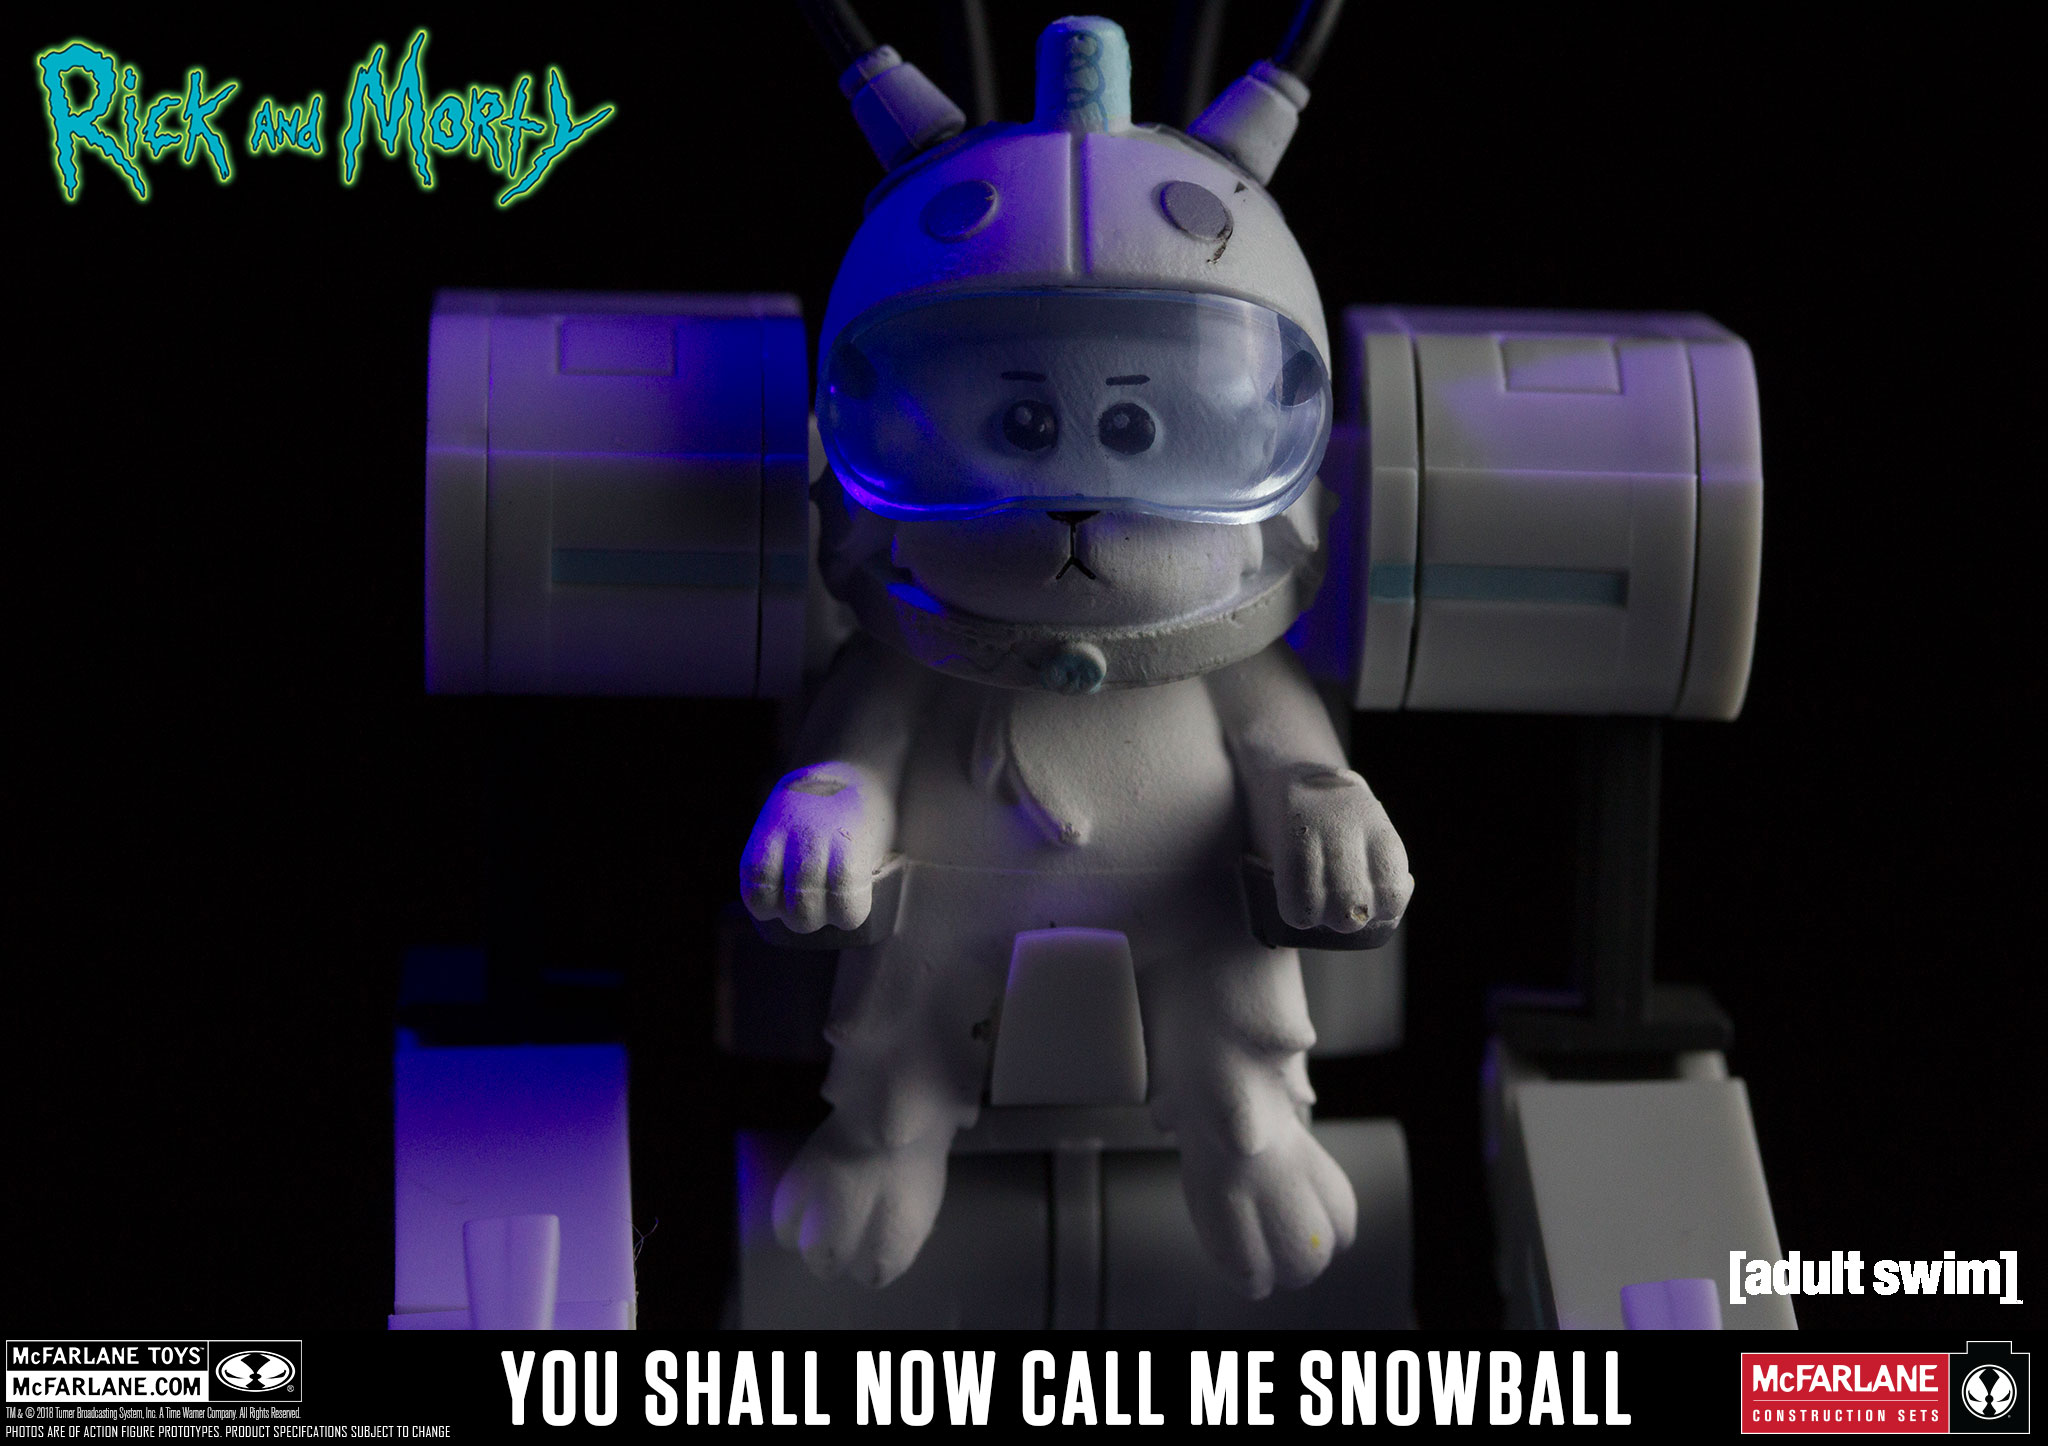 2018 McFarlane Toys RICK and MORTY You Shall Now Call Me Snowball Building Set 